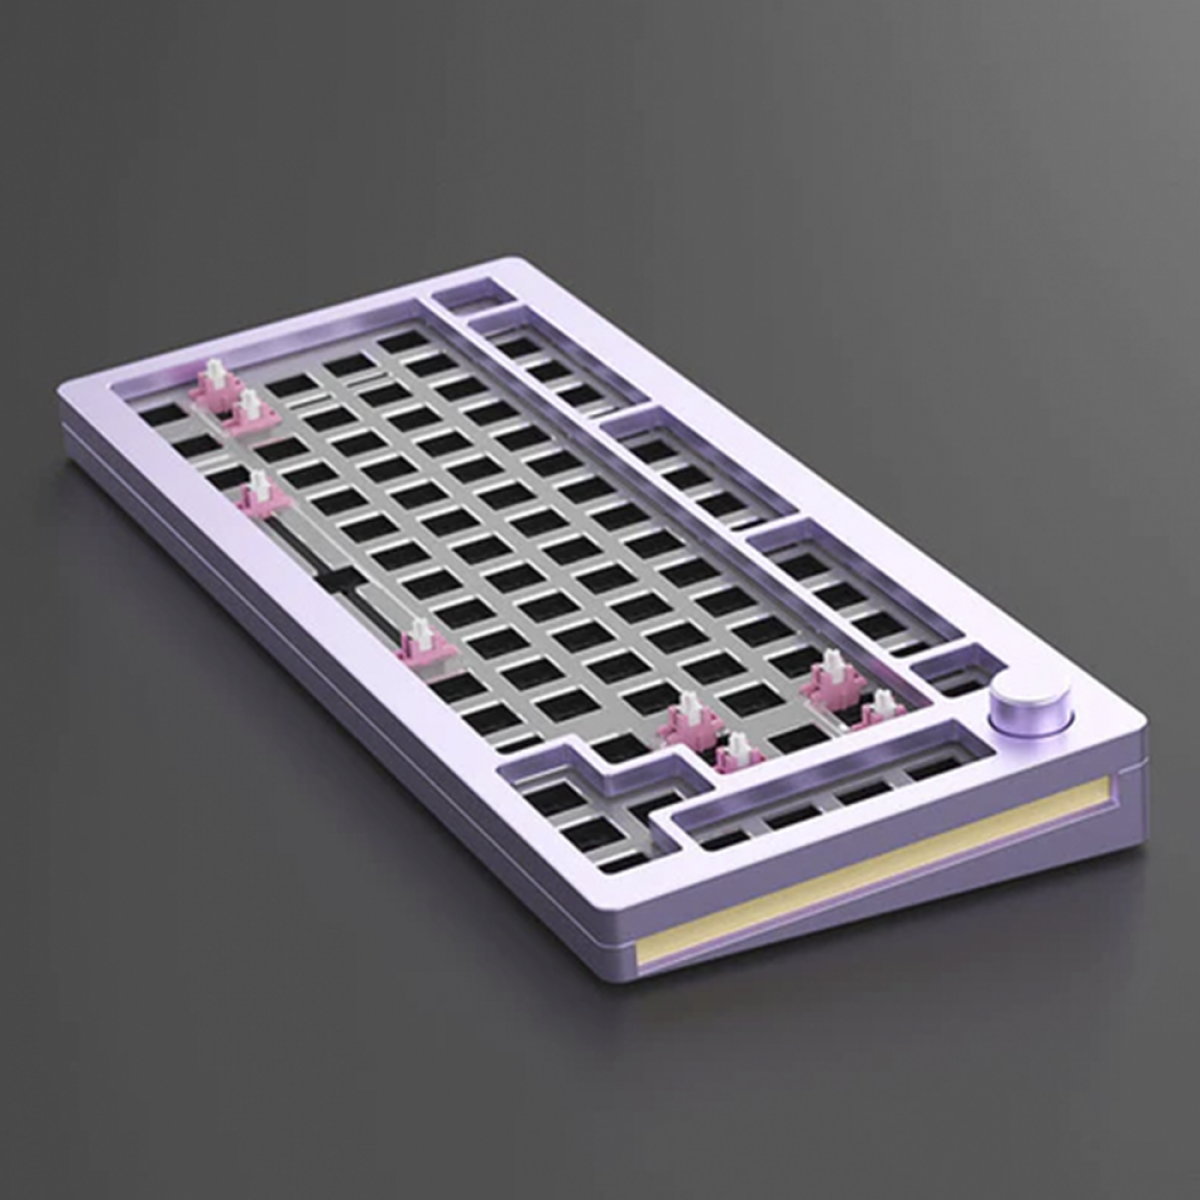 teclado magnus gamer pro m858｜Búsqueda de TikTok